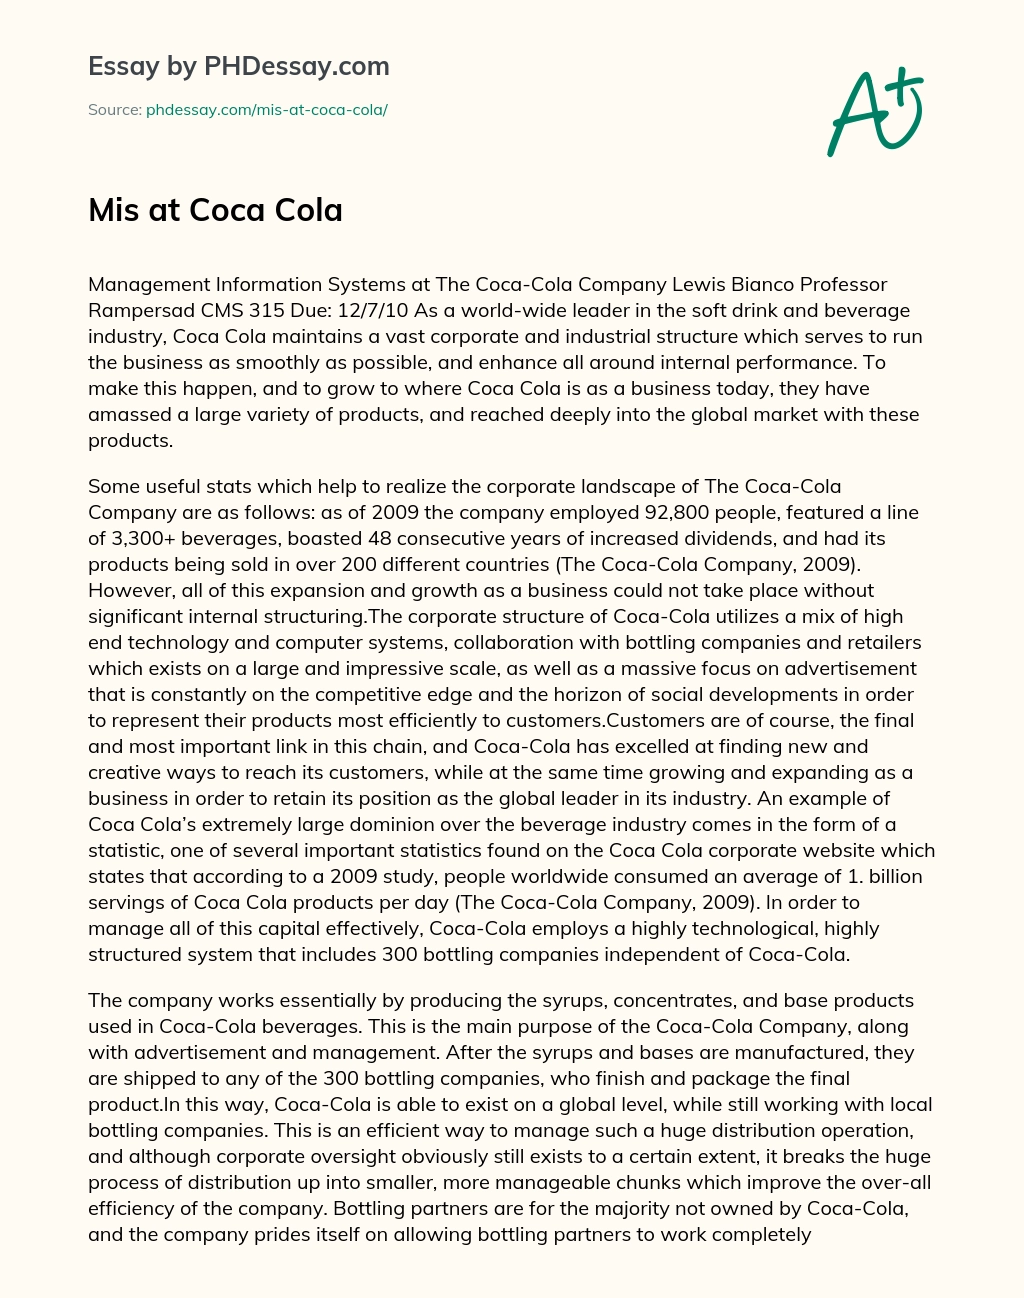 Mis at Coca Cola essay